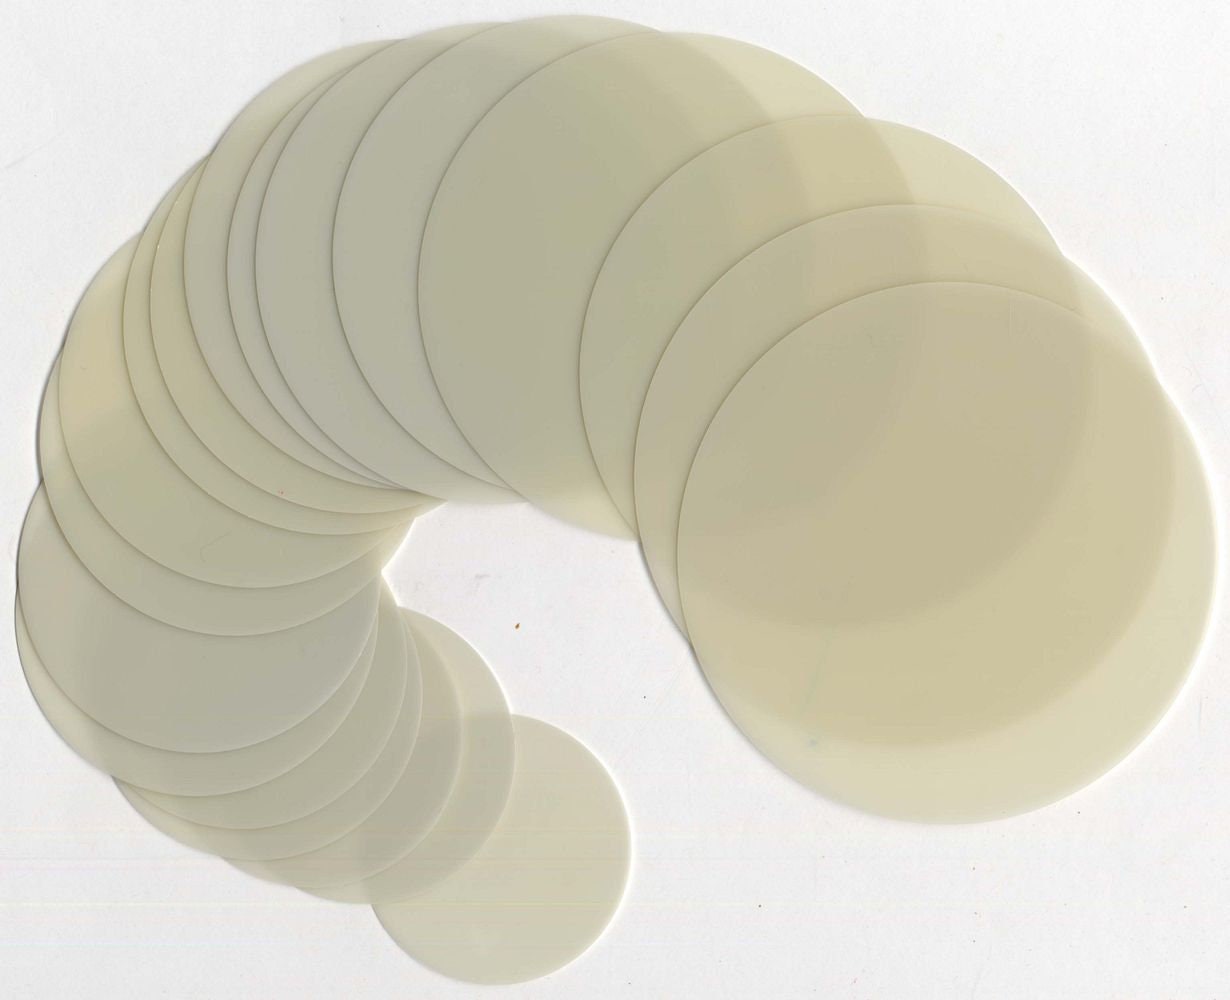 Bigger Perfect Circles 15 Sizes, 40 Heat Resistant Plastic Templates by Karen Kay Buckley